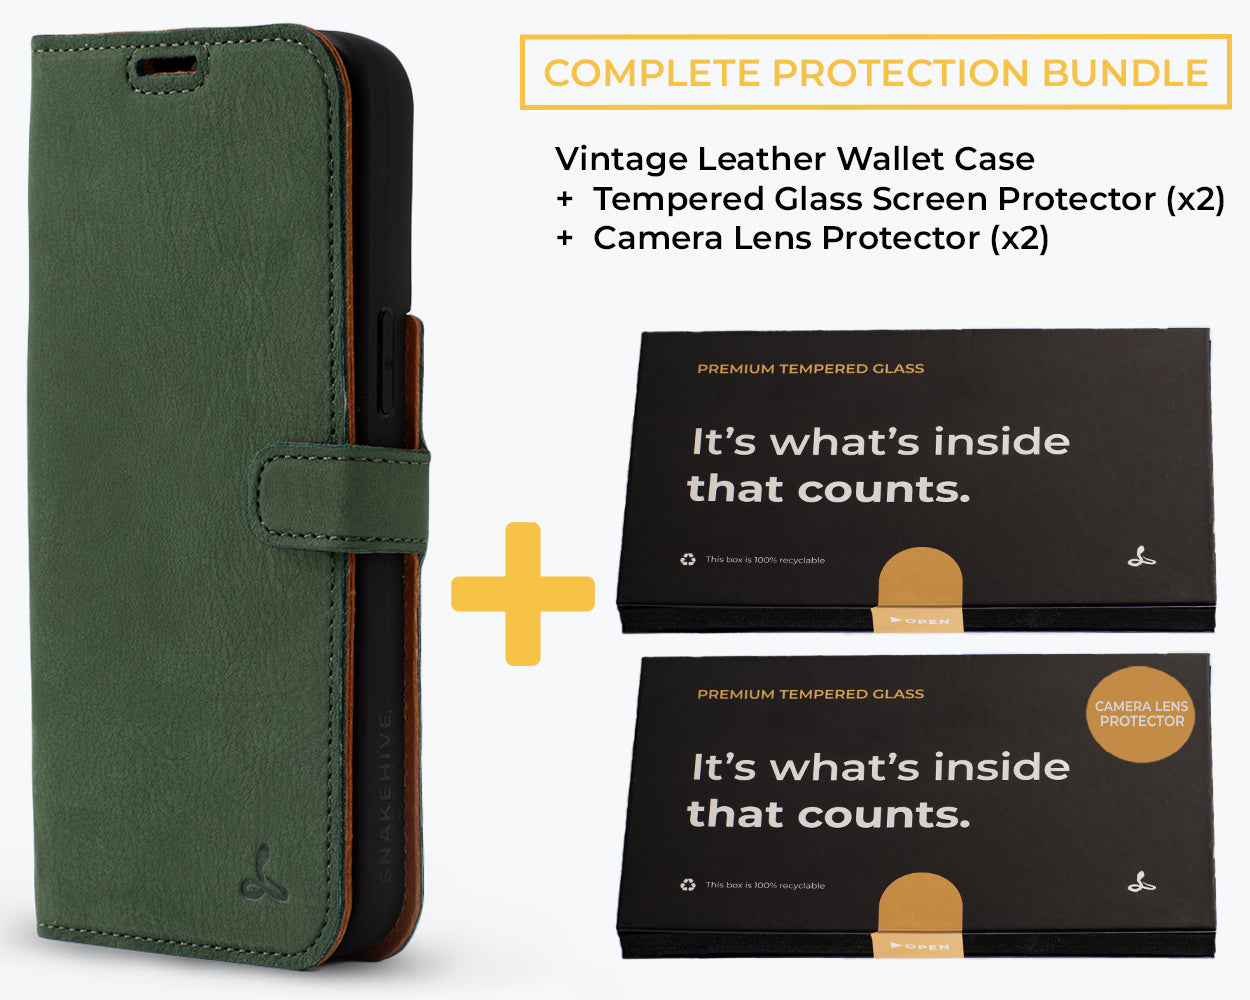 Complete Protection Bundle (Vintage Wallet) - Apple iPhone 12 Pro